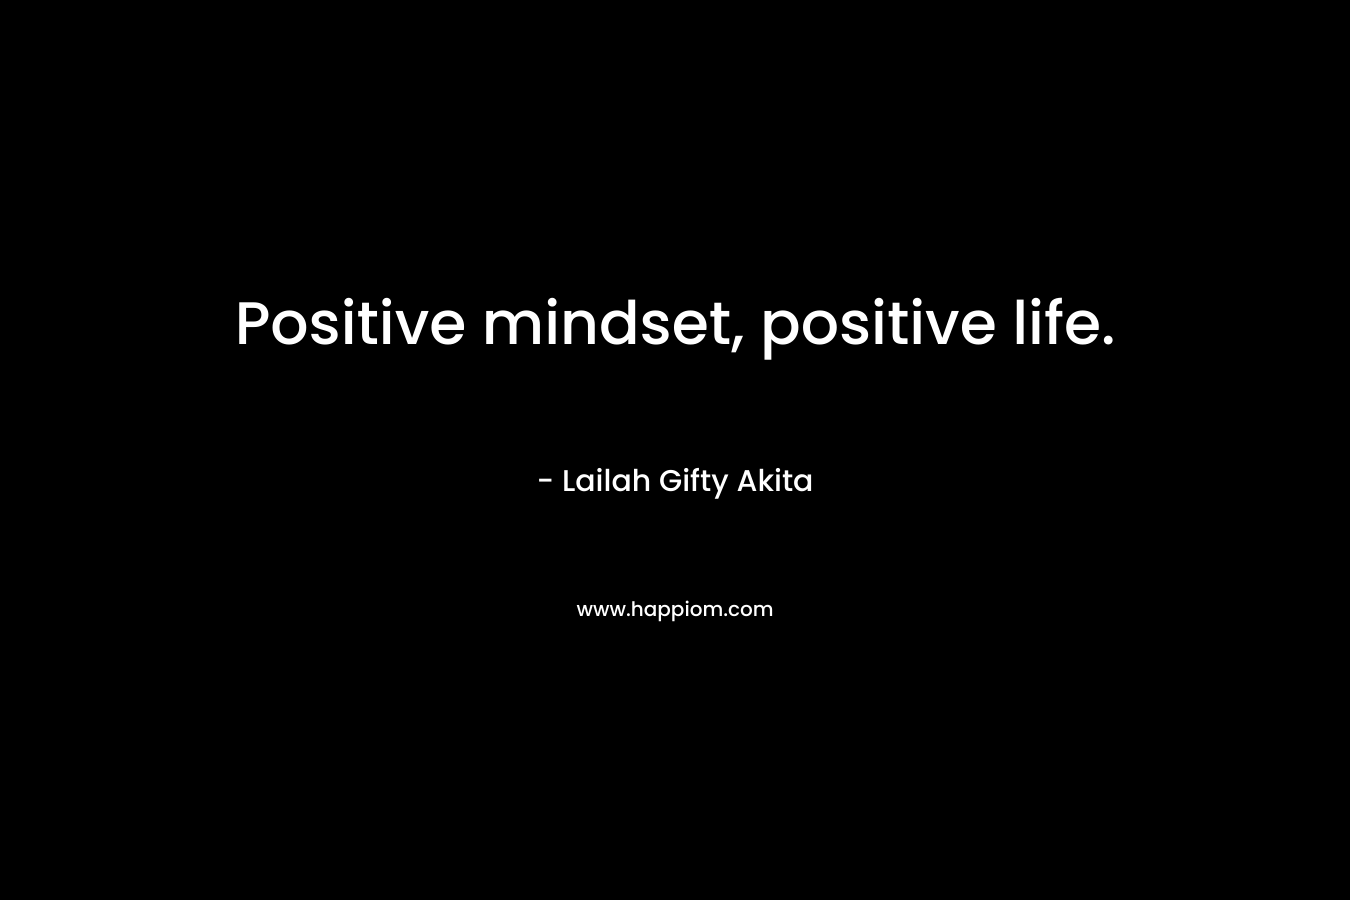 Positive mindset, positive life.